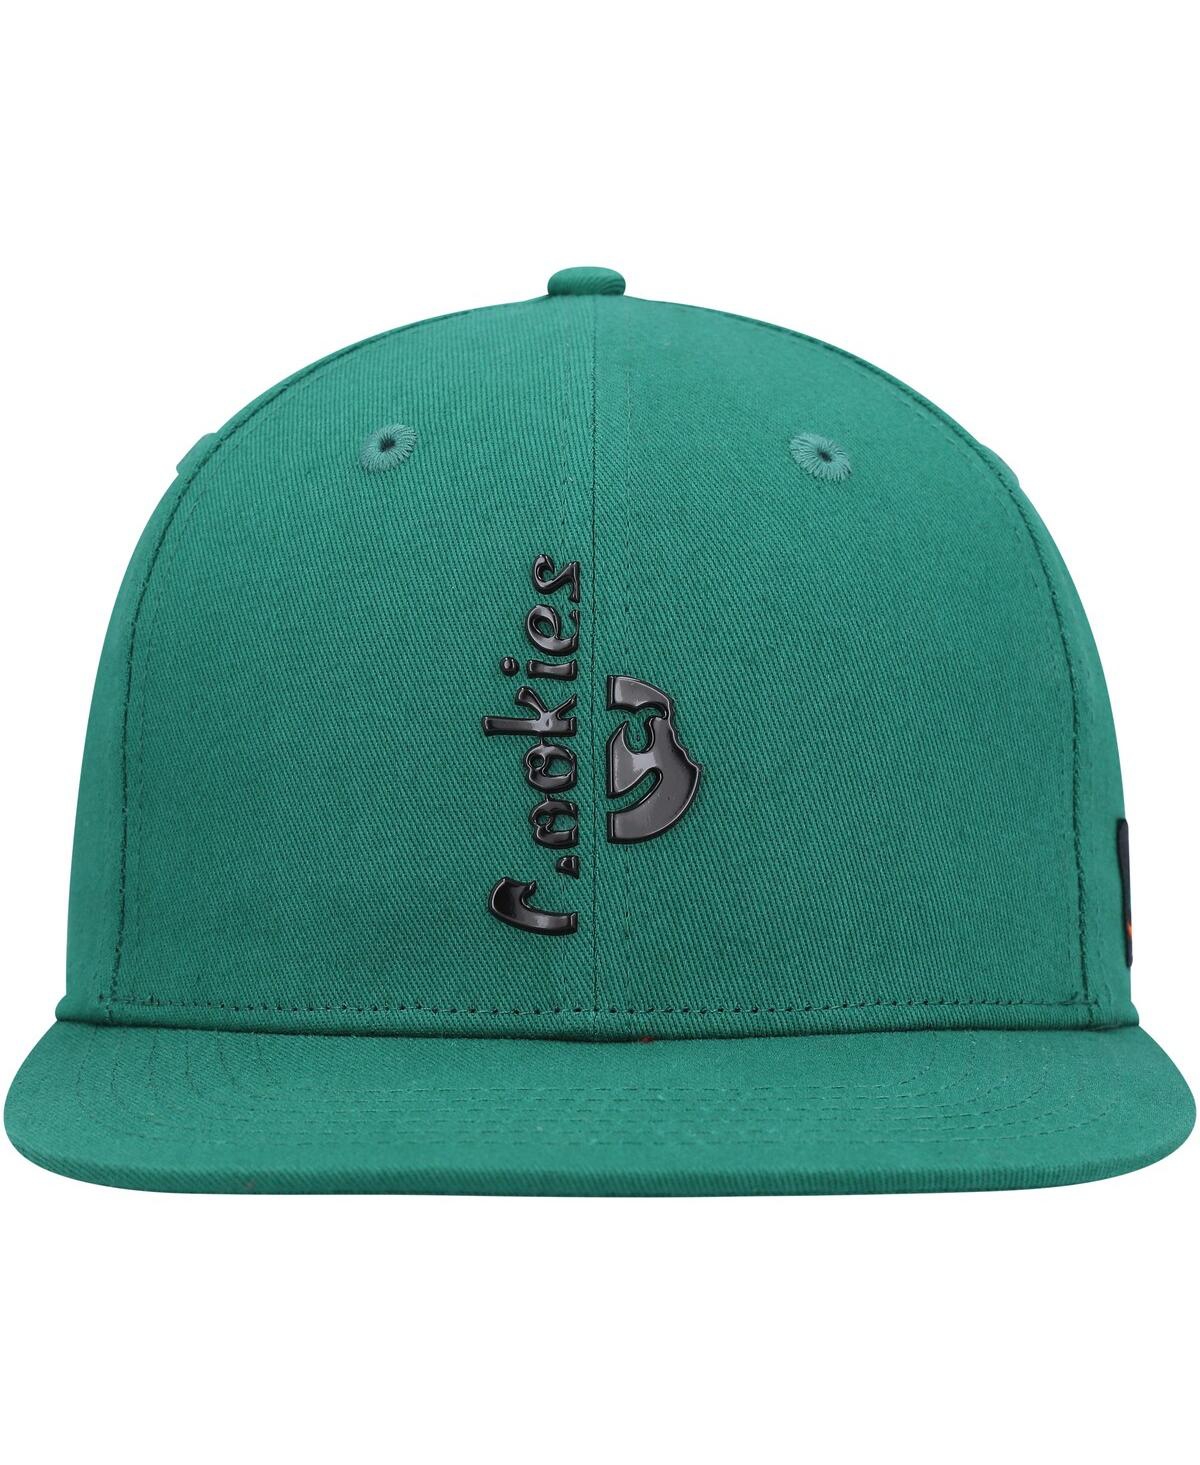 Shop Cookies Men's  Green Searchlight Snapback Hat